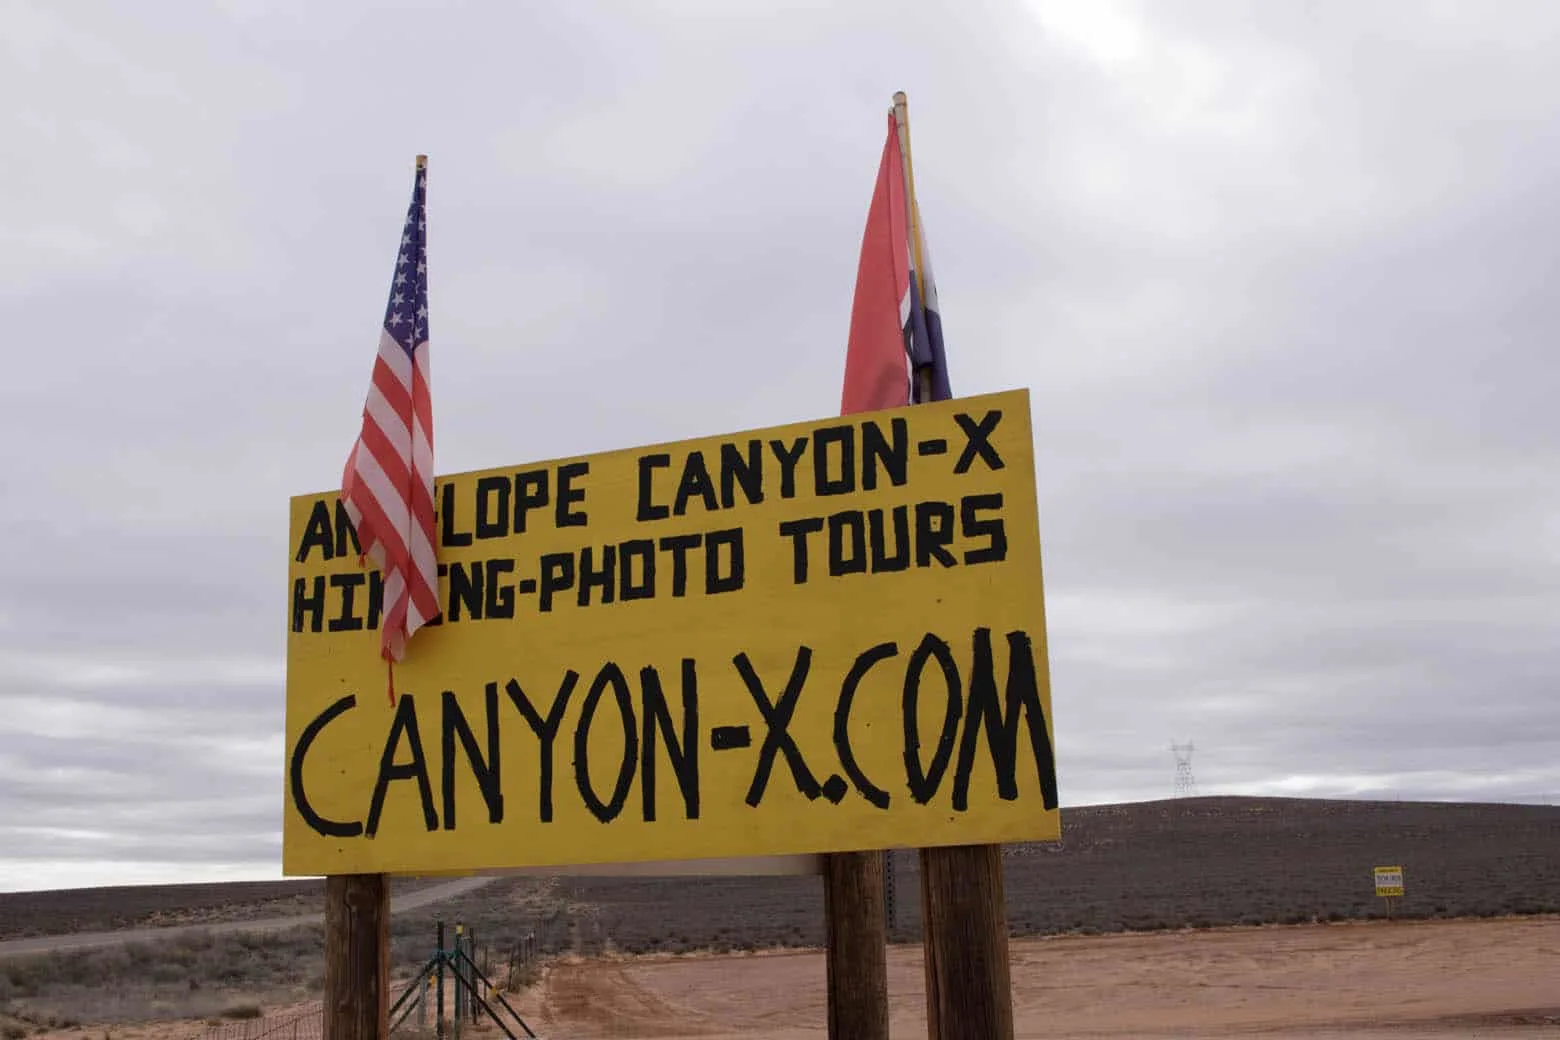 Visiting Canyon X - Antelope Canyon in January